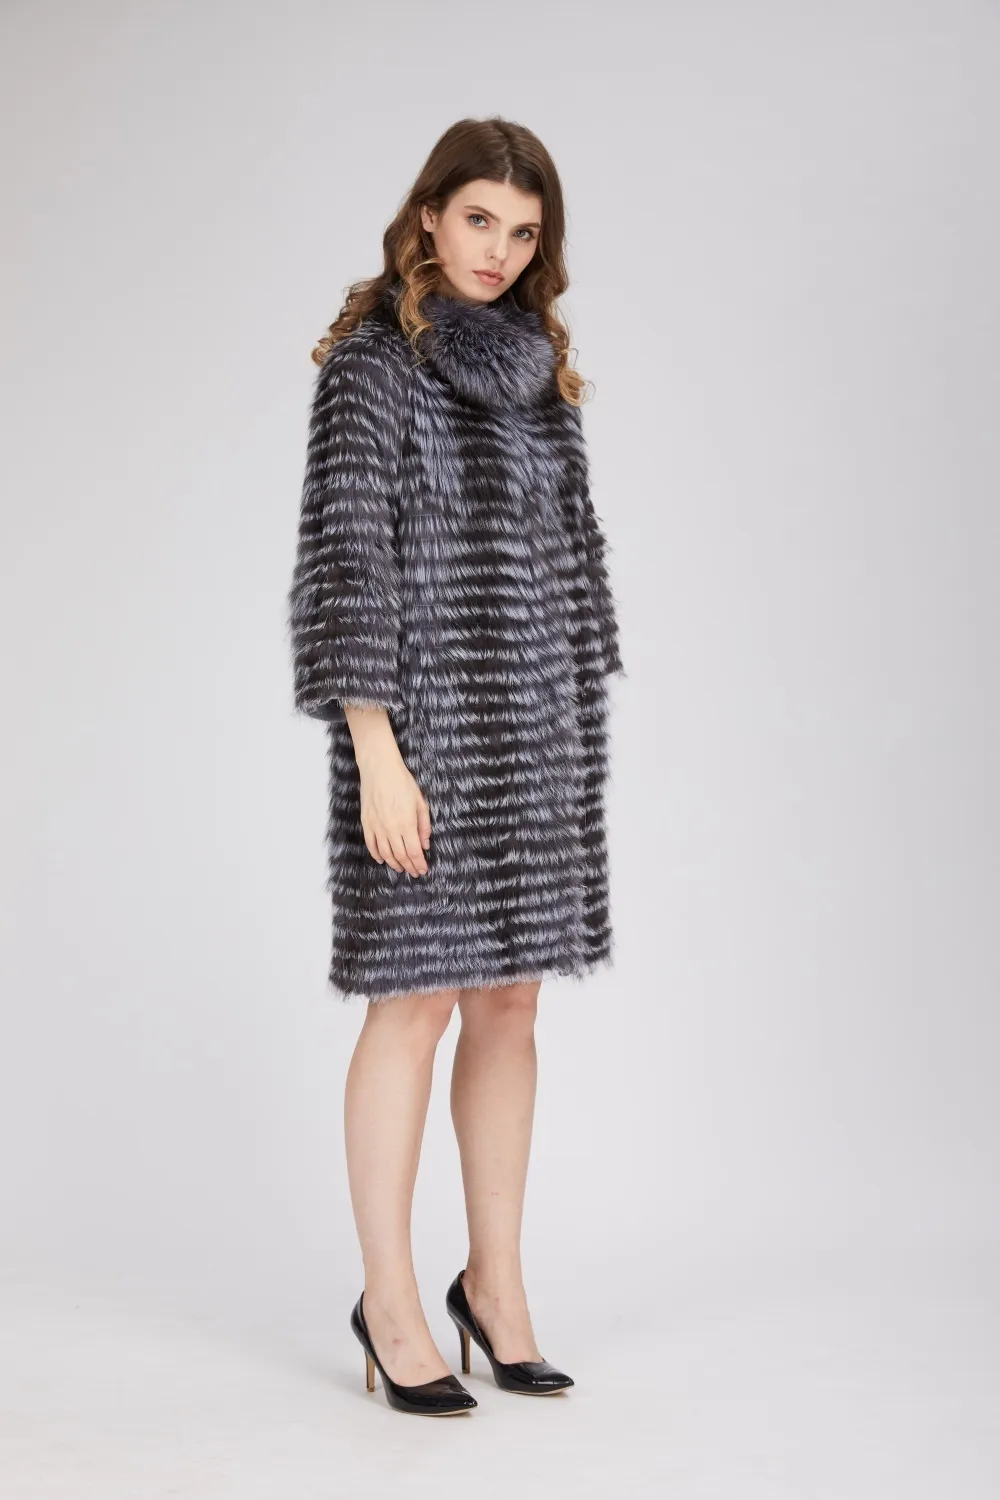 silver fox fur coat with wool lining eileenhou 1809165 (22)